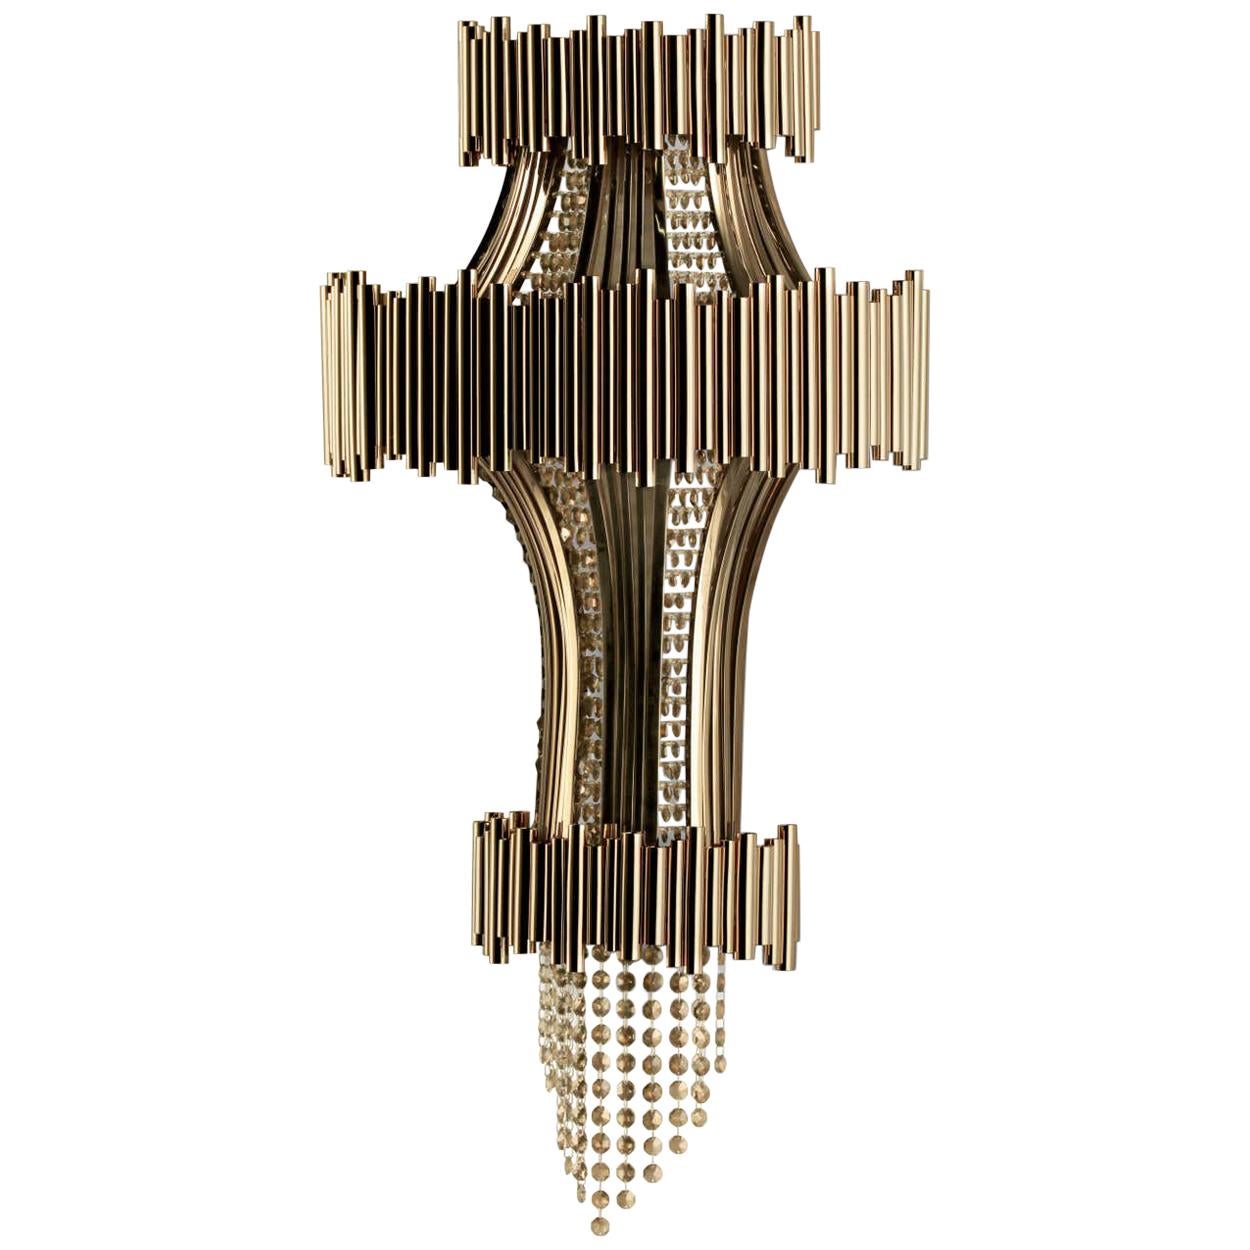 Sconce in Brass with Swarovski Crystal Details